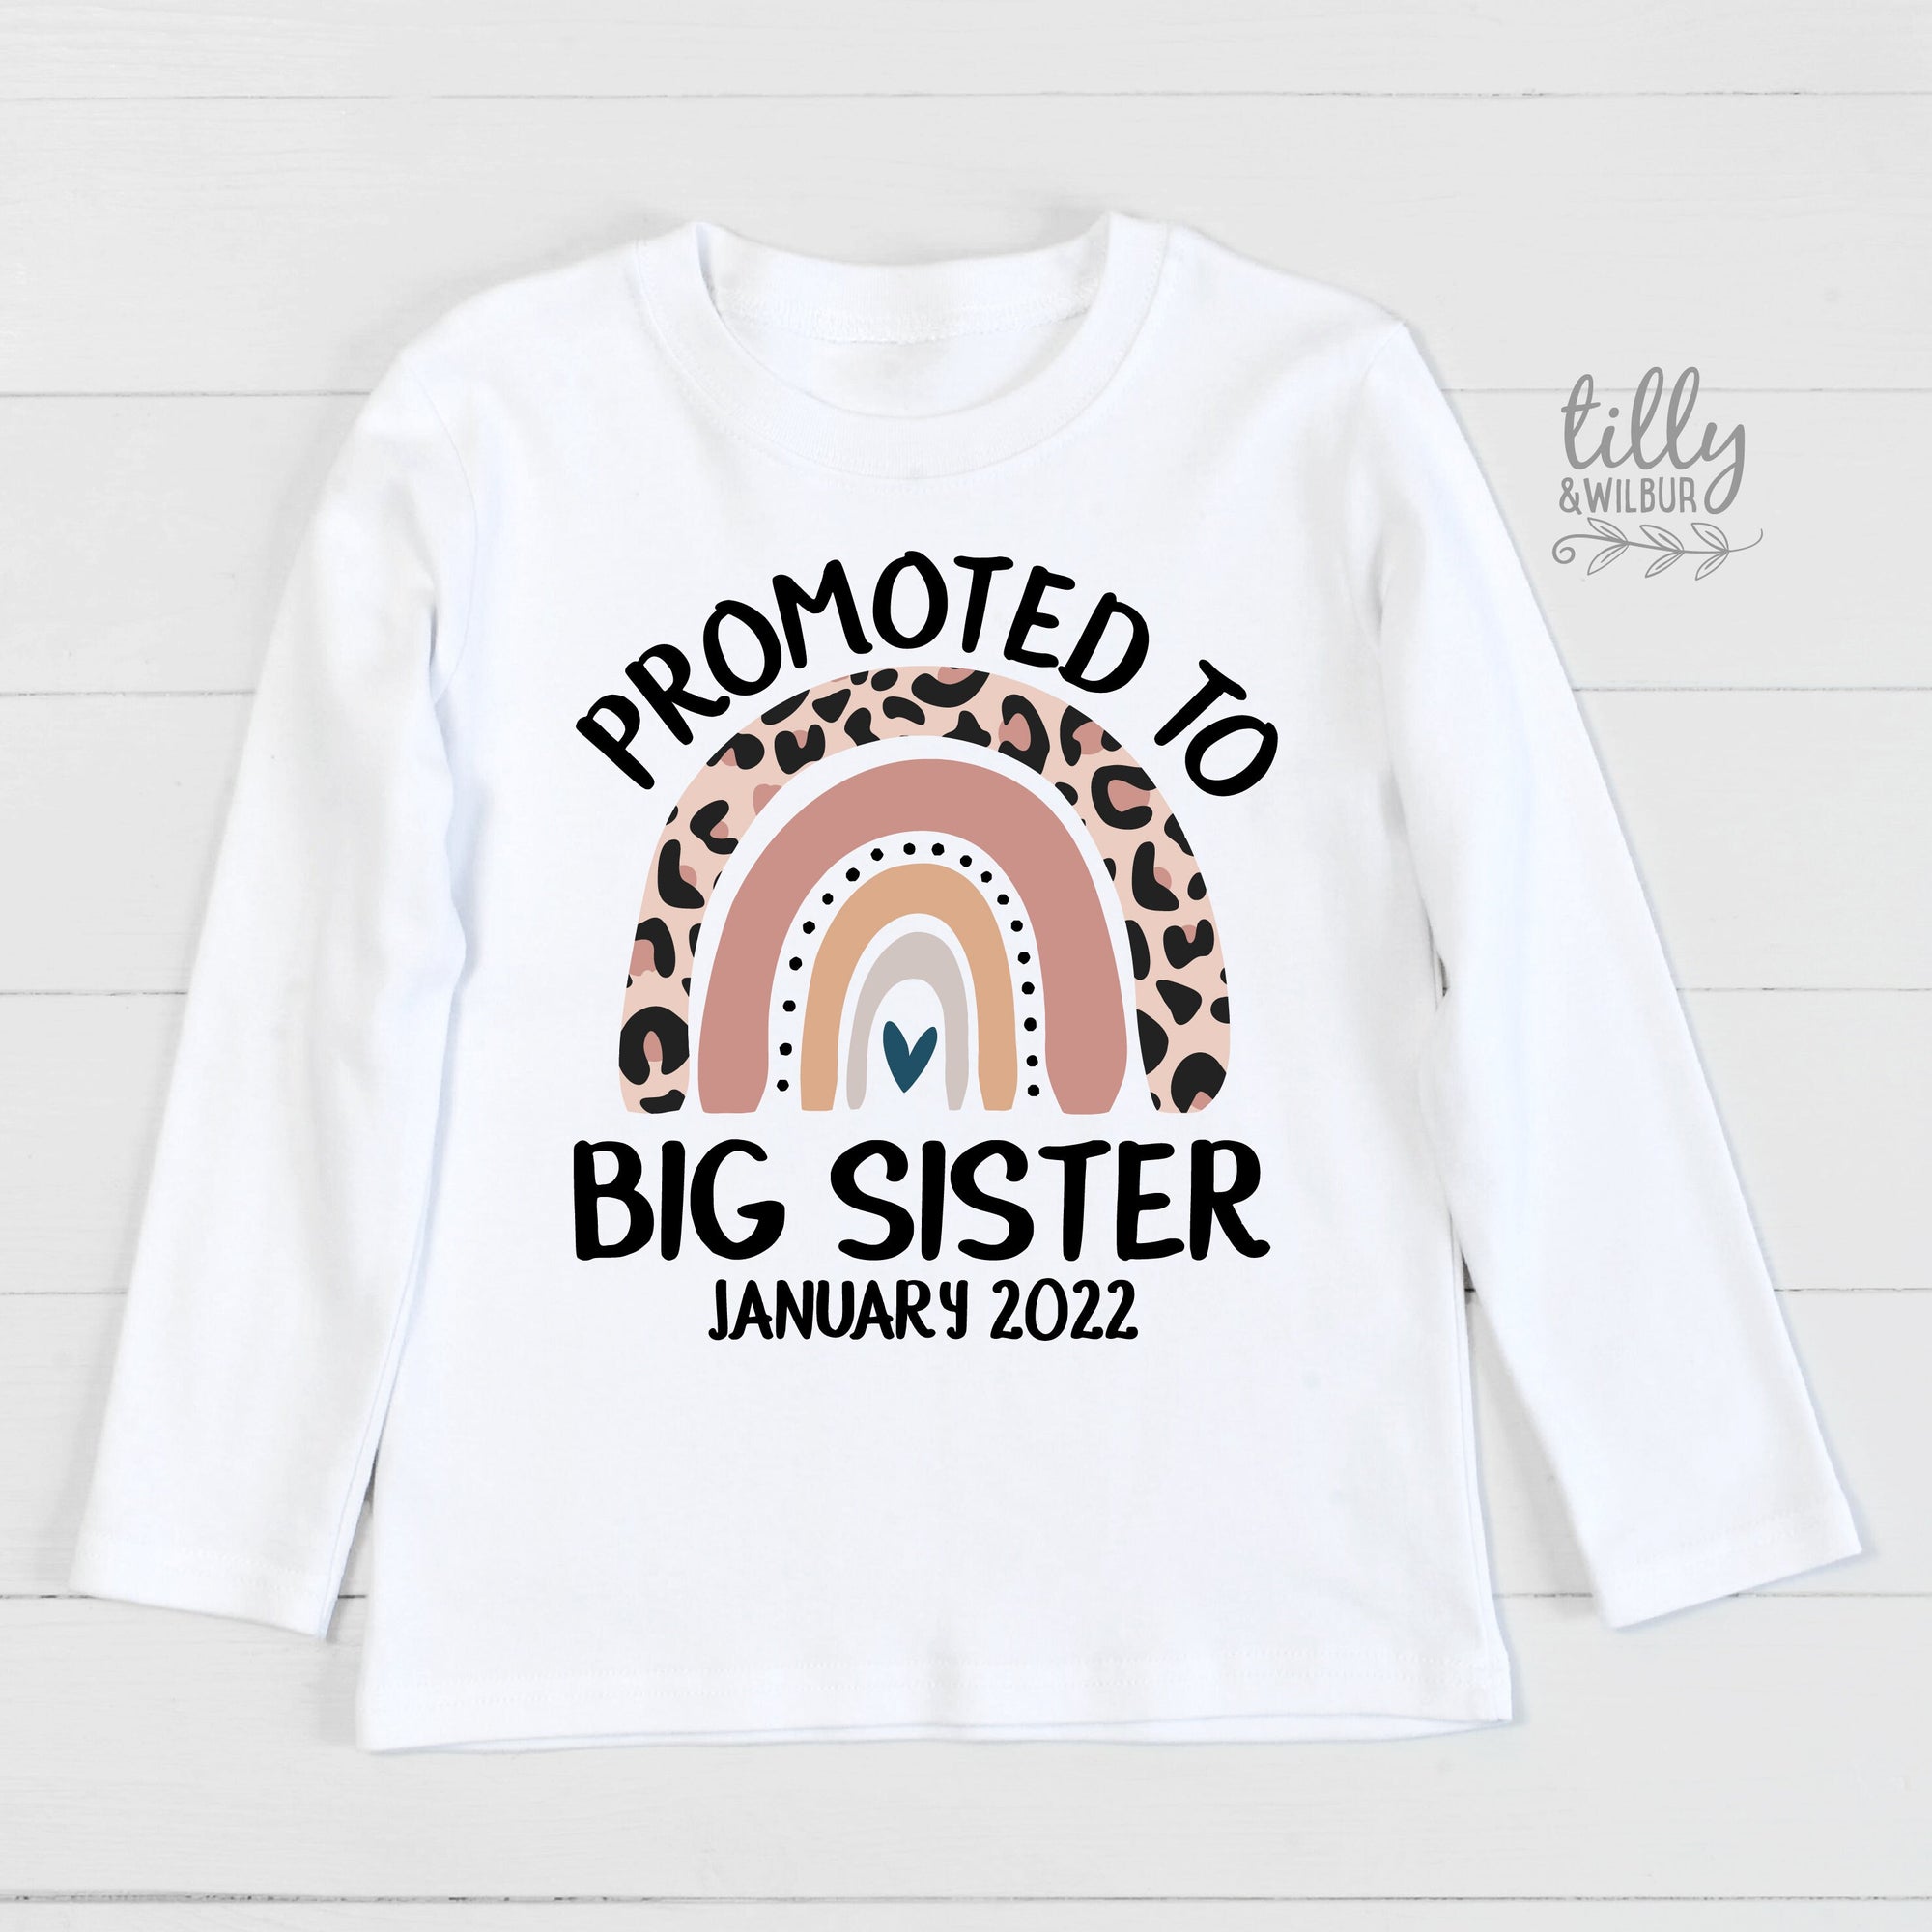 Promoted To Big Sister T-Shirt, Big Sister Gift, Big Sister Shirt, Sister Announcement, Pregnancy Announcement, I&#39;m Going To Be A Big Sister